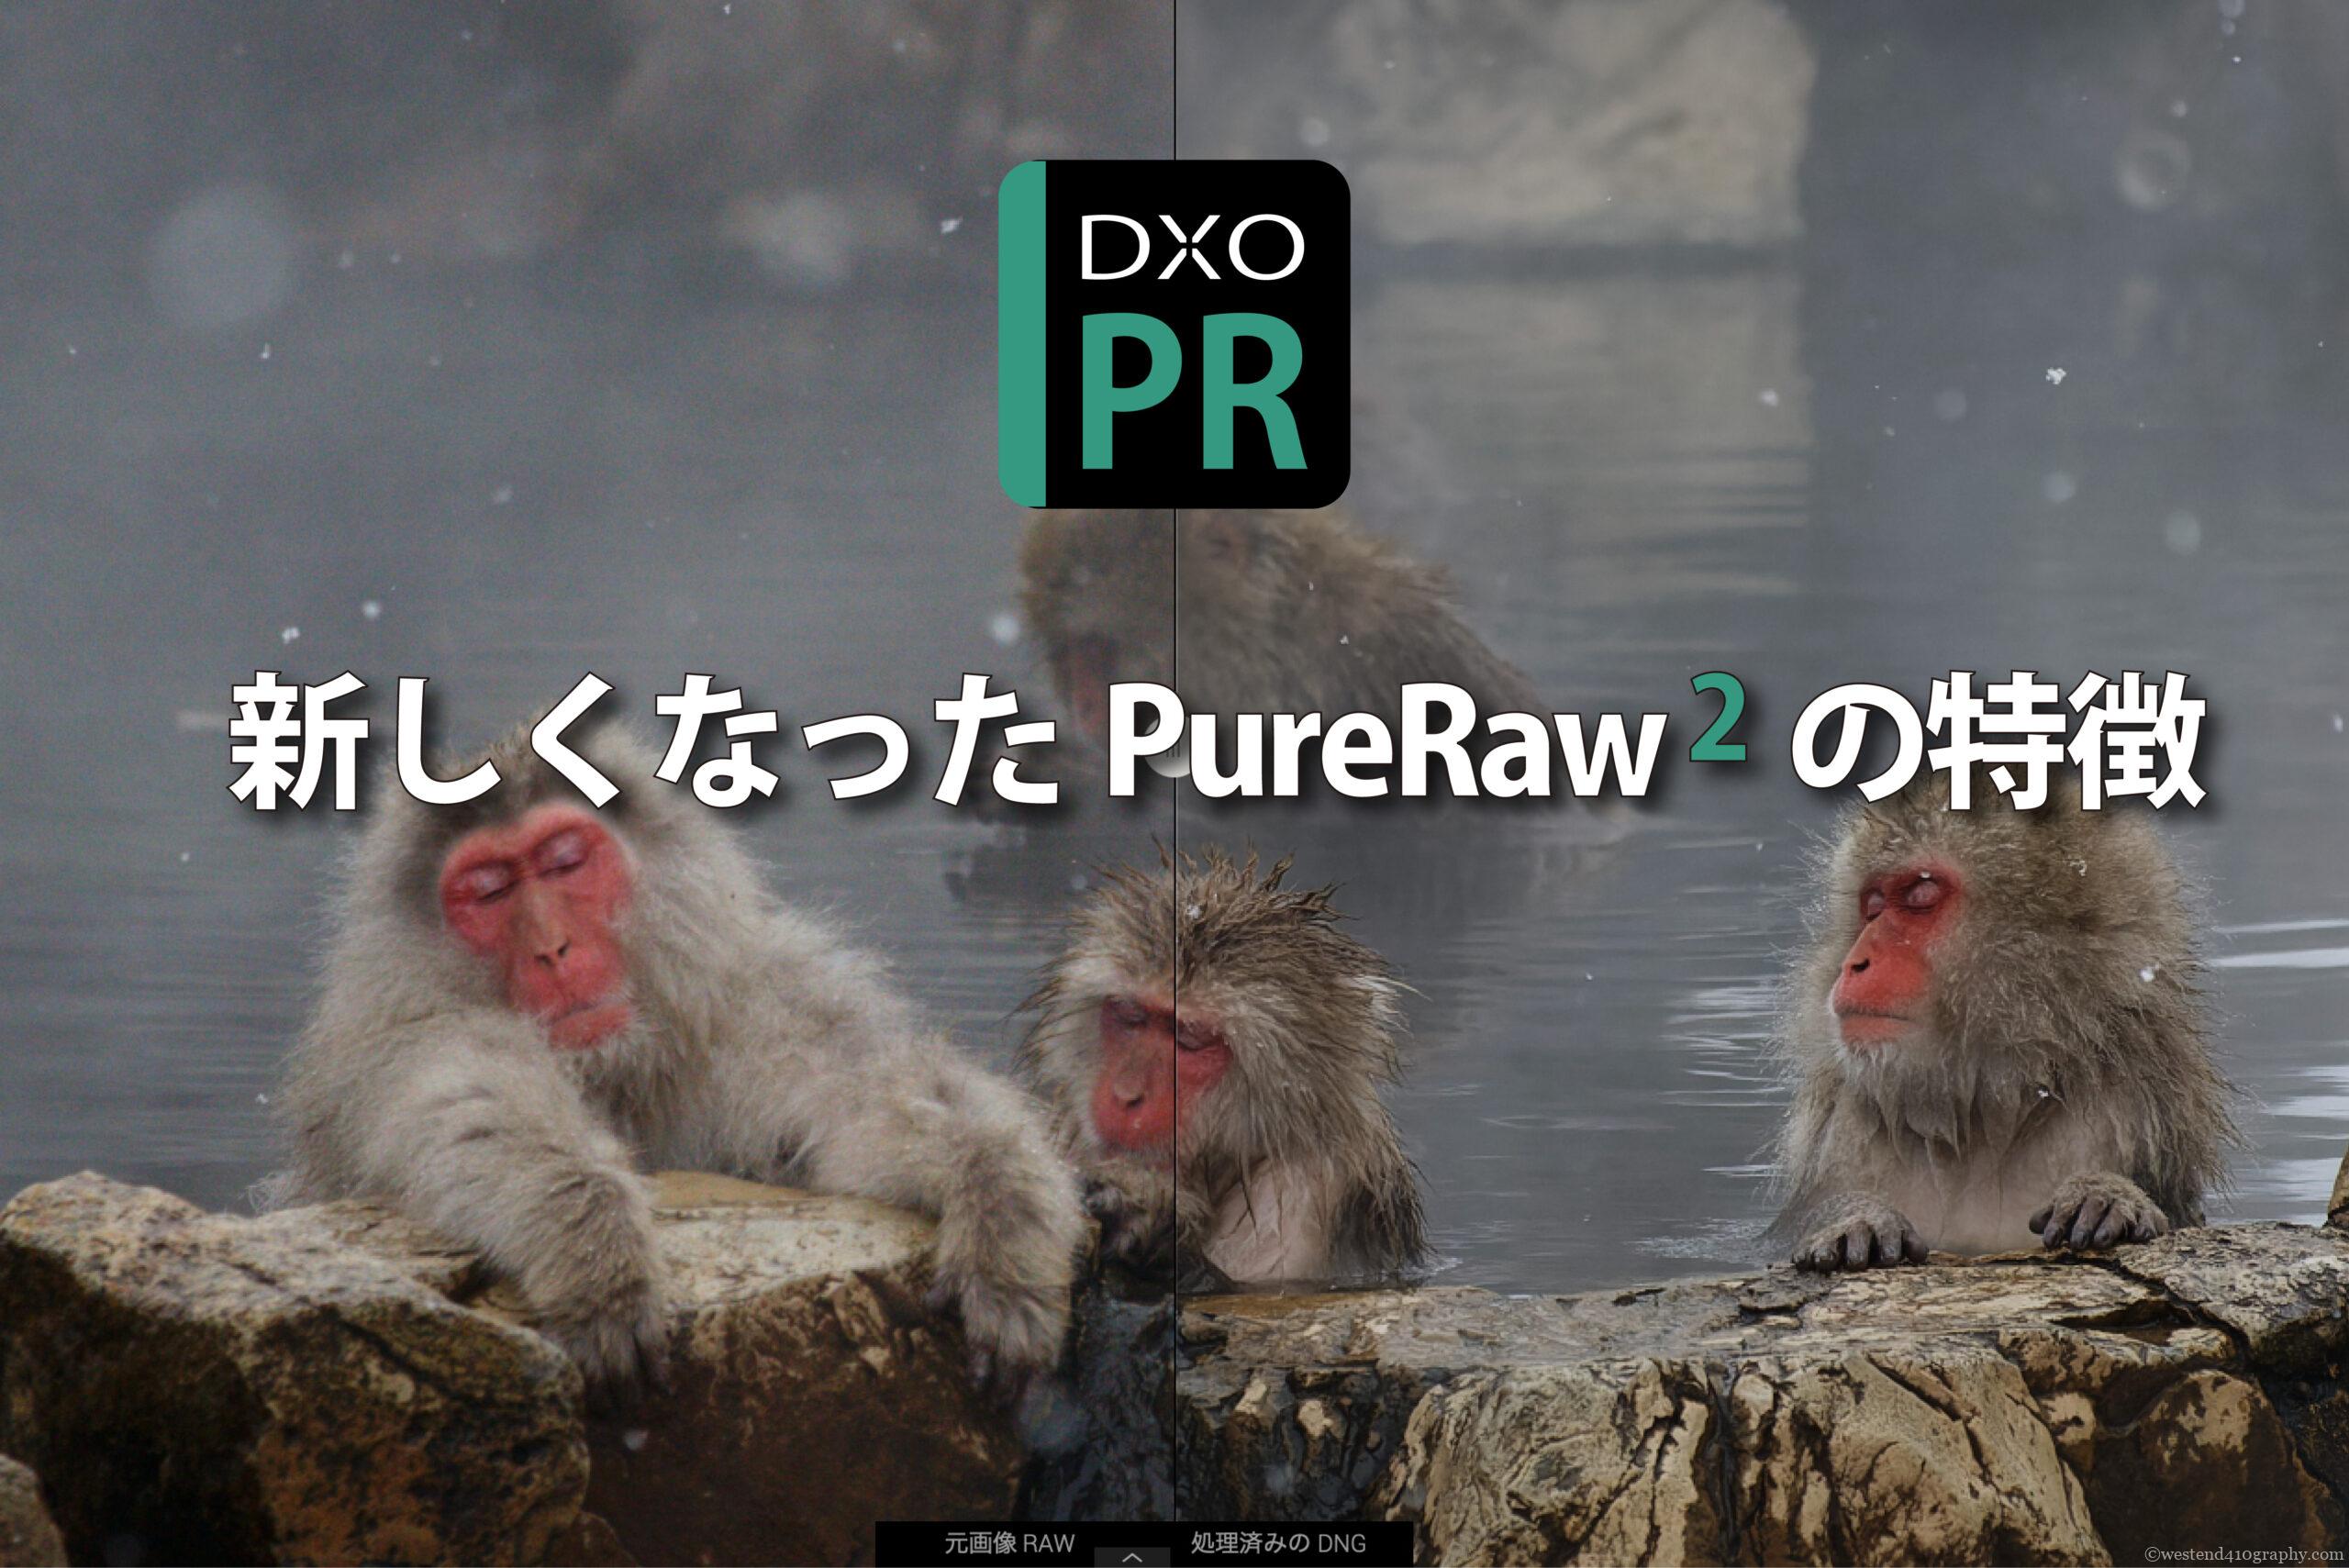 DxO PureRaw 2 thumbnail